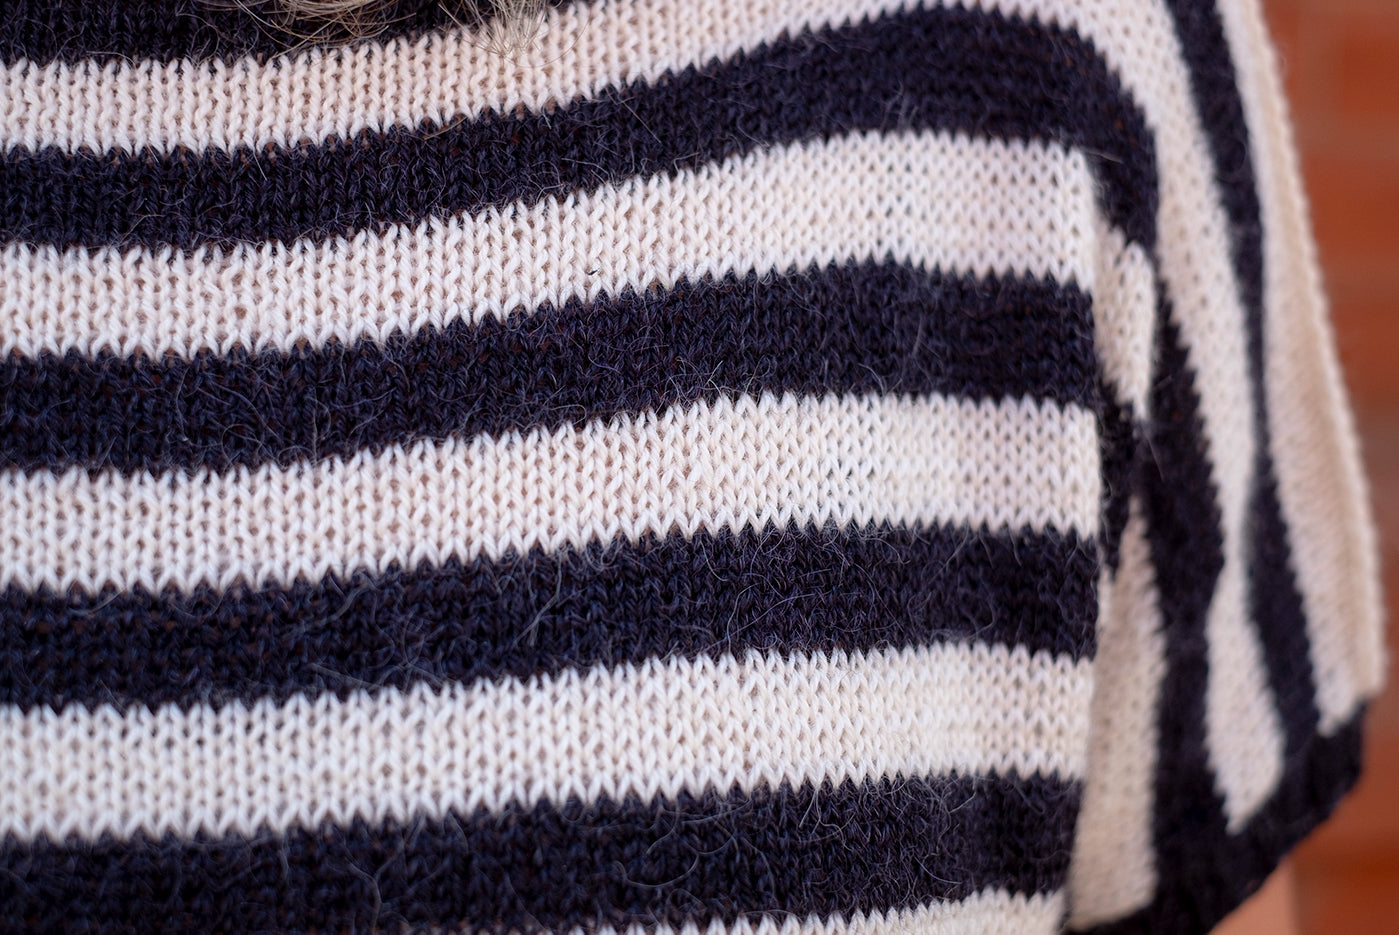 roxborough knitted dolman knitting pattern